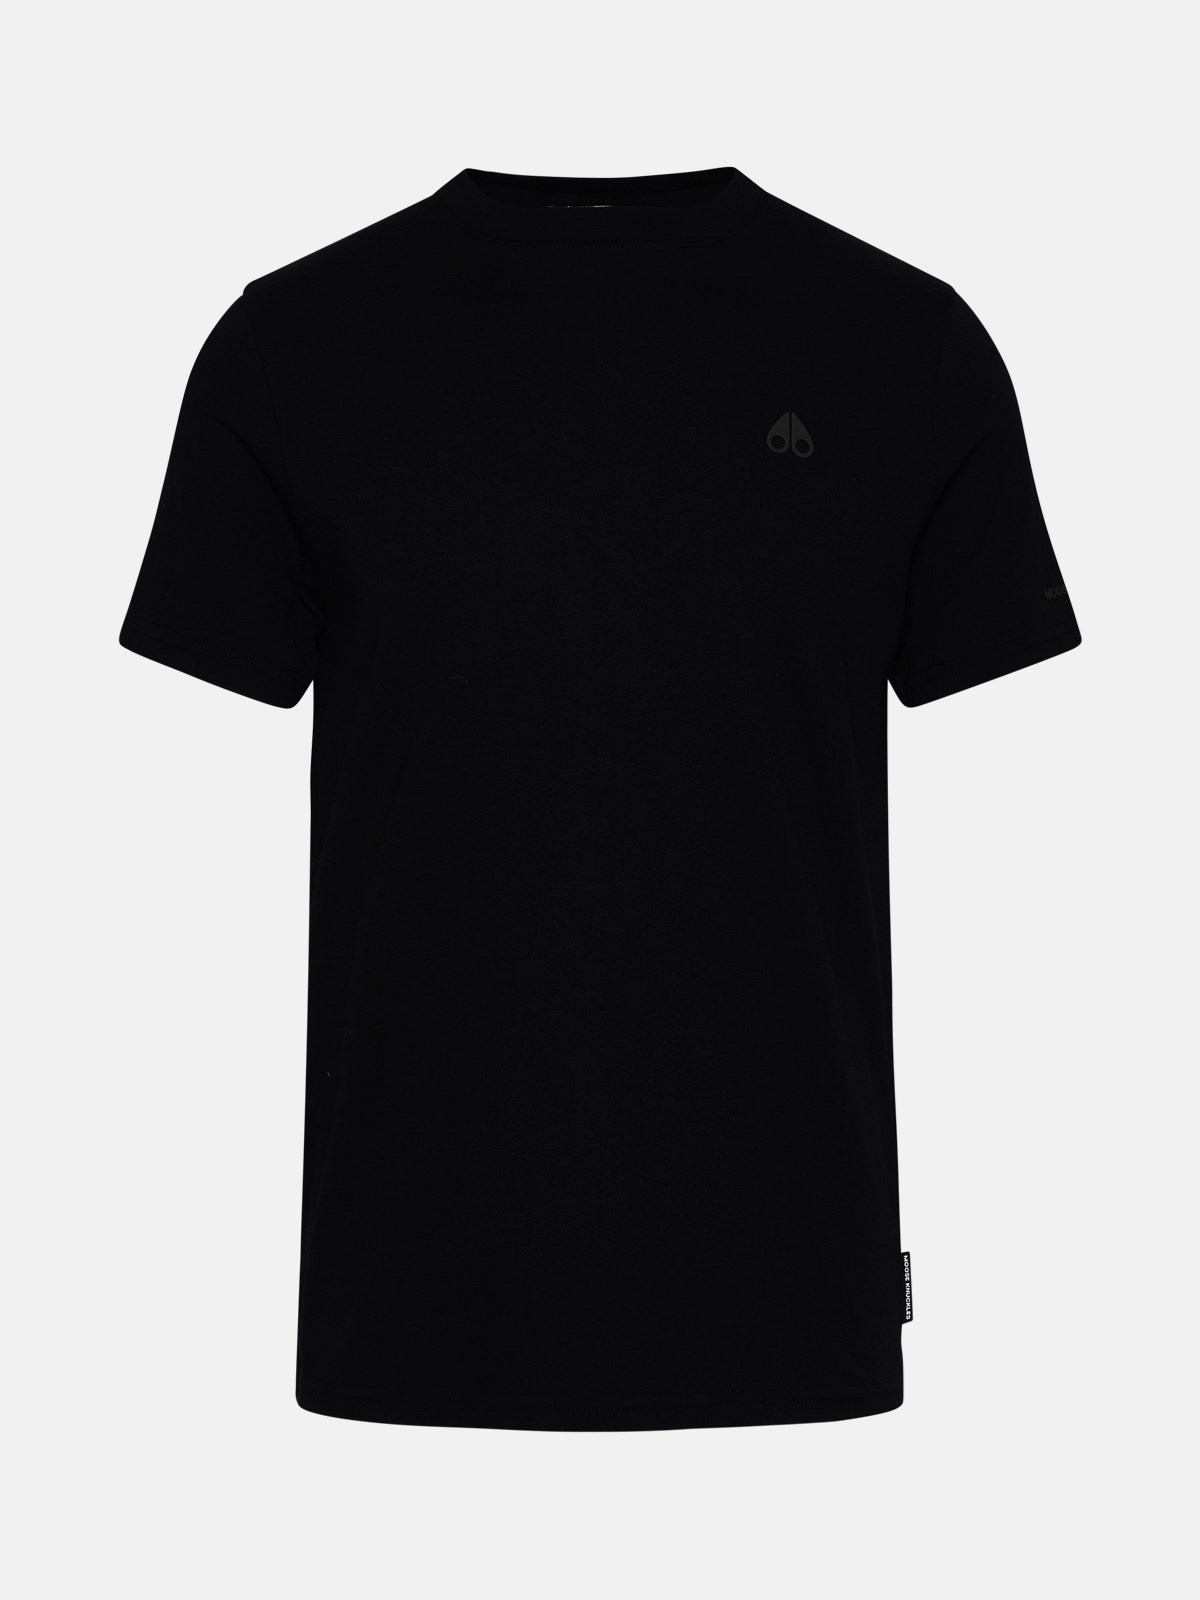 Moose Knuckles Black Cotton T-shirt